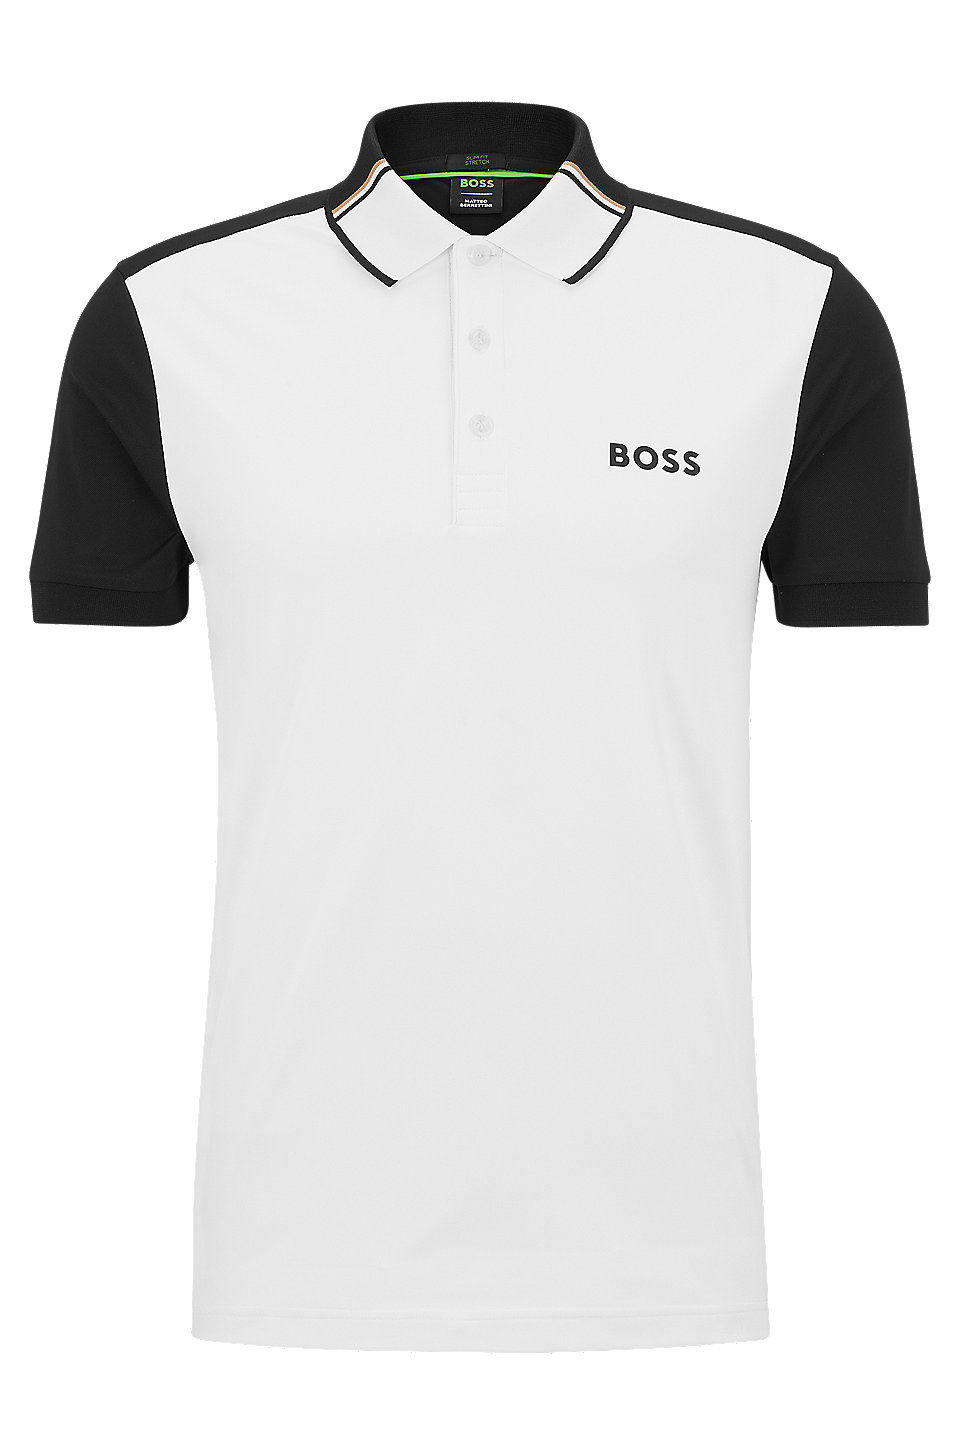 Embankment røg tolerance BOSS - BOSS x Matteo Berrettini polo shirt with logo